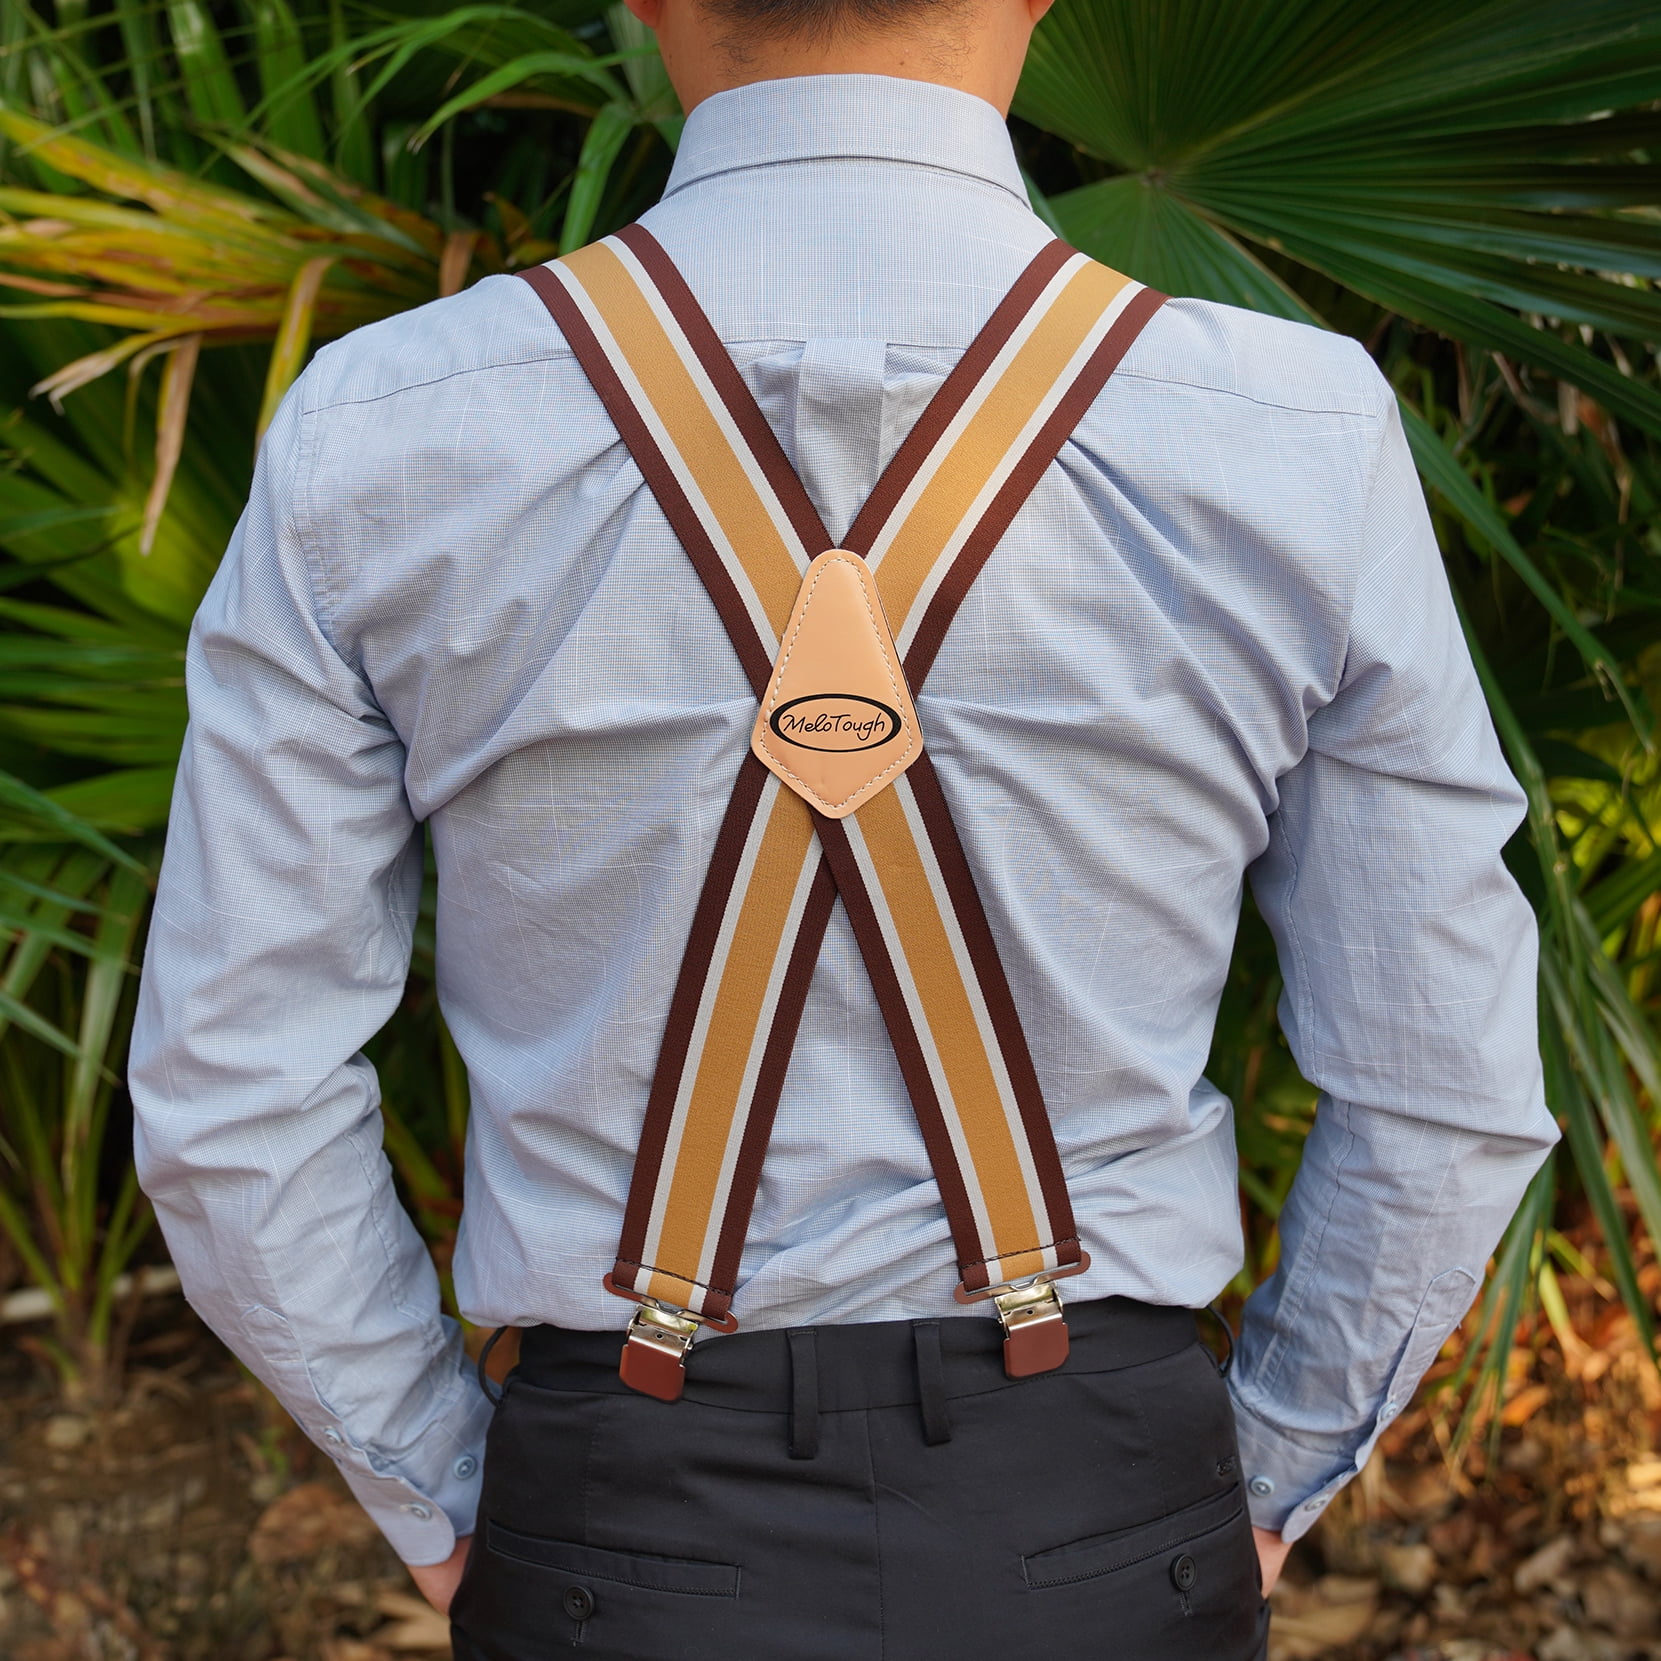 Work Suspenders Adjustable Elastic Braces Big and TallMen's Solid Suspender  With X-Back 4 Heavy Duty Clips 